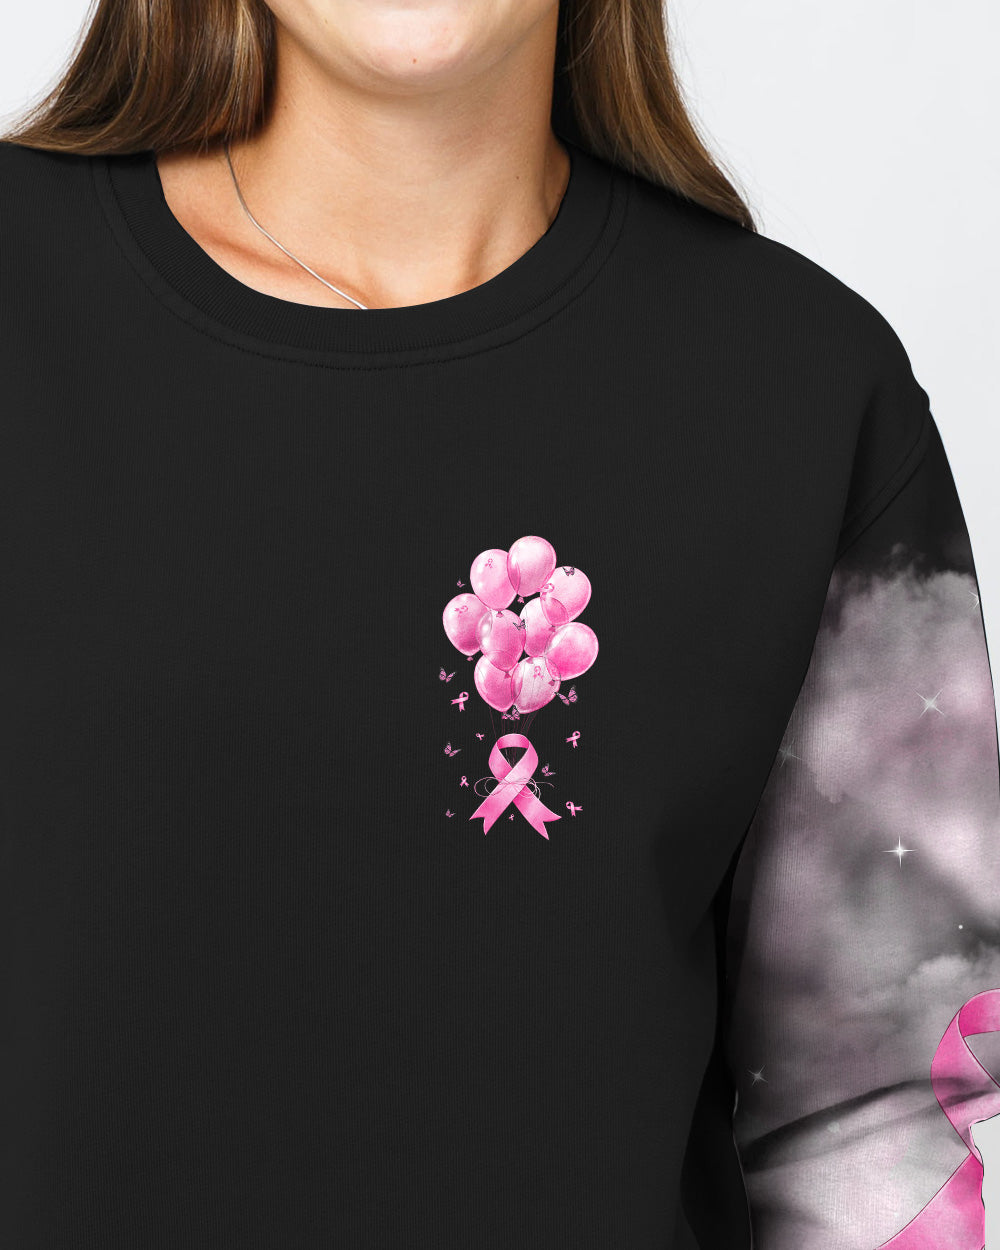 Pink Balloon Ribbon Butterfly Women's Breast Cancer Awareness Sweatshirt